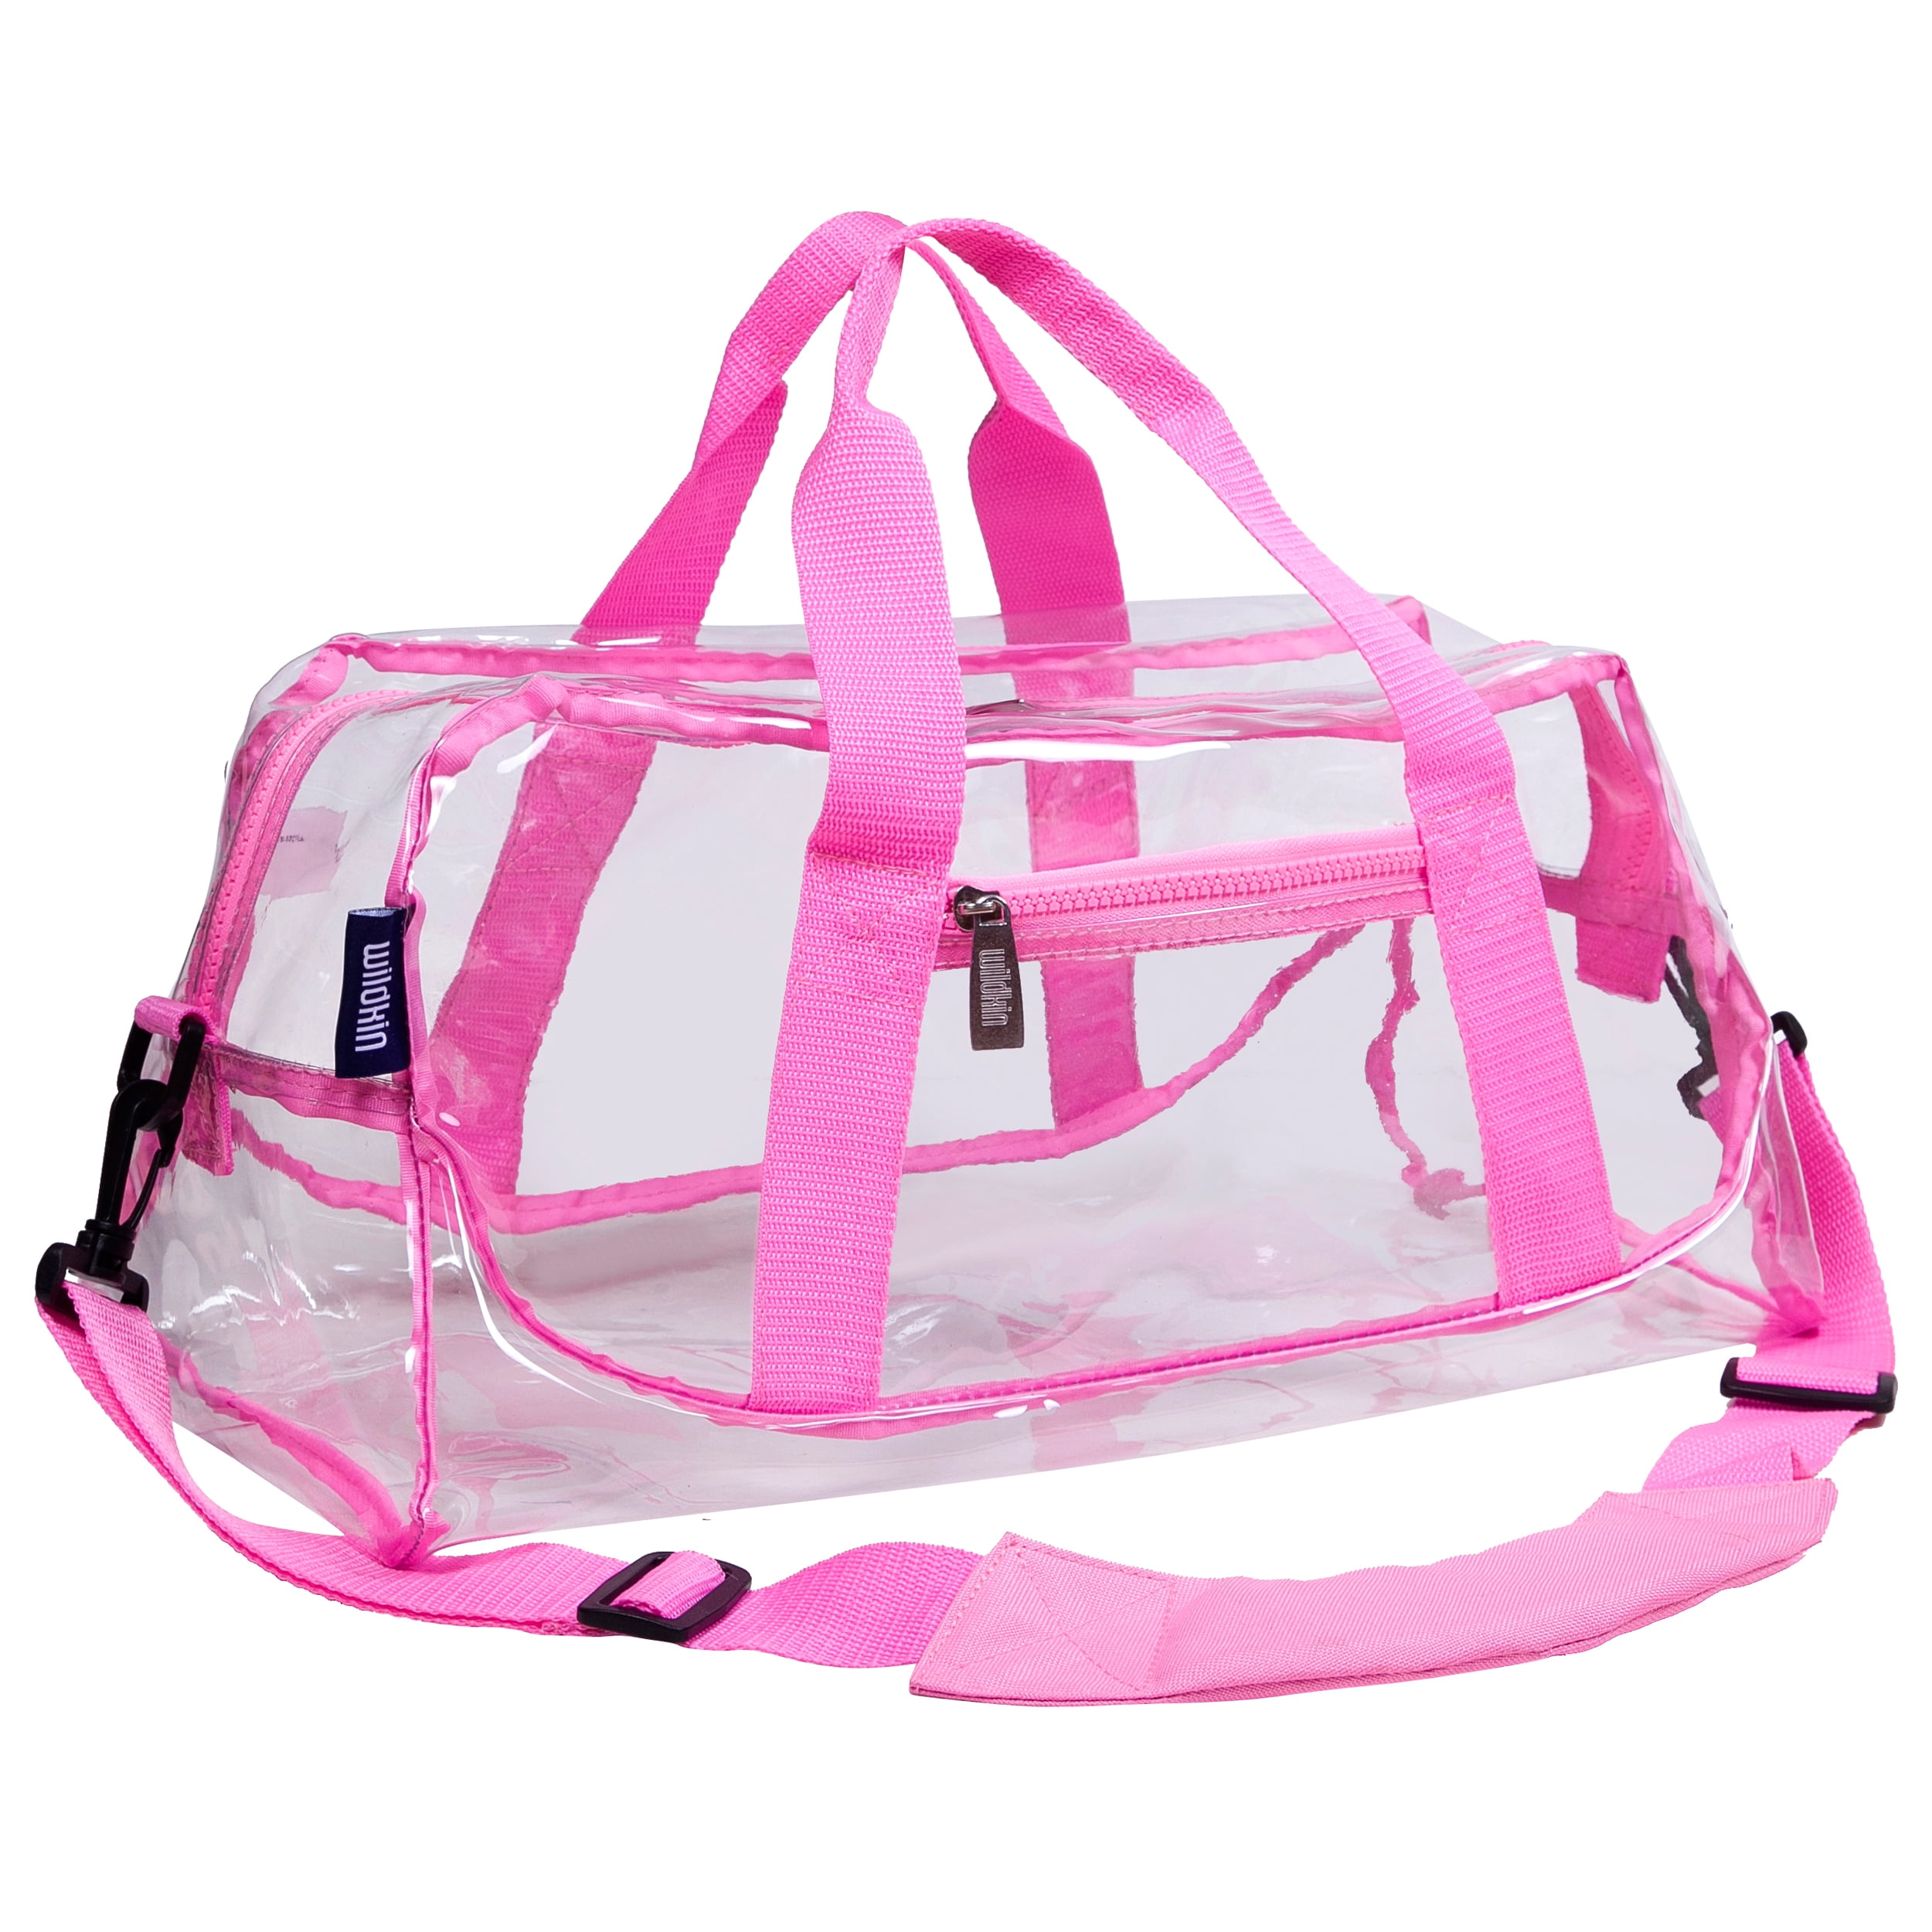 Clear w/ Pink Trim Overnighter Duffel Bag - 0 - 0